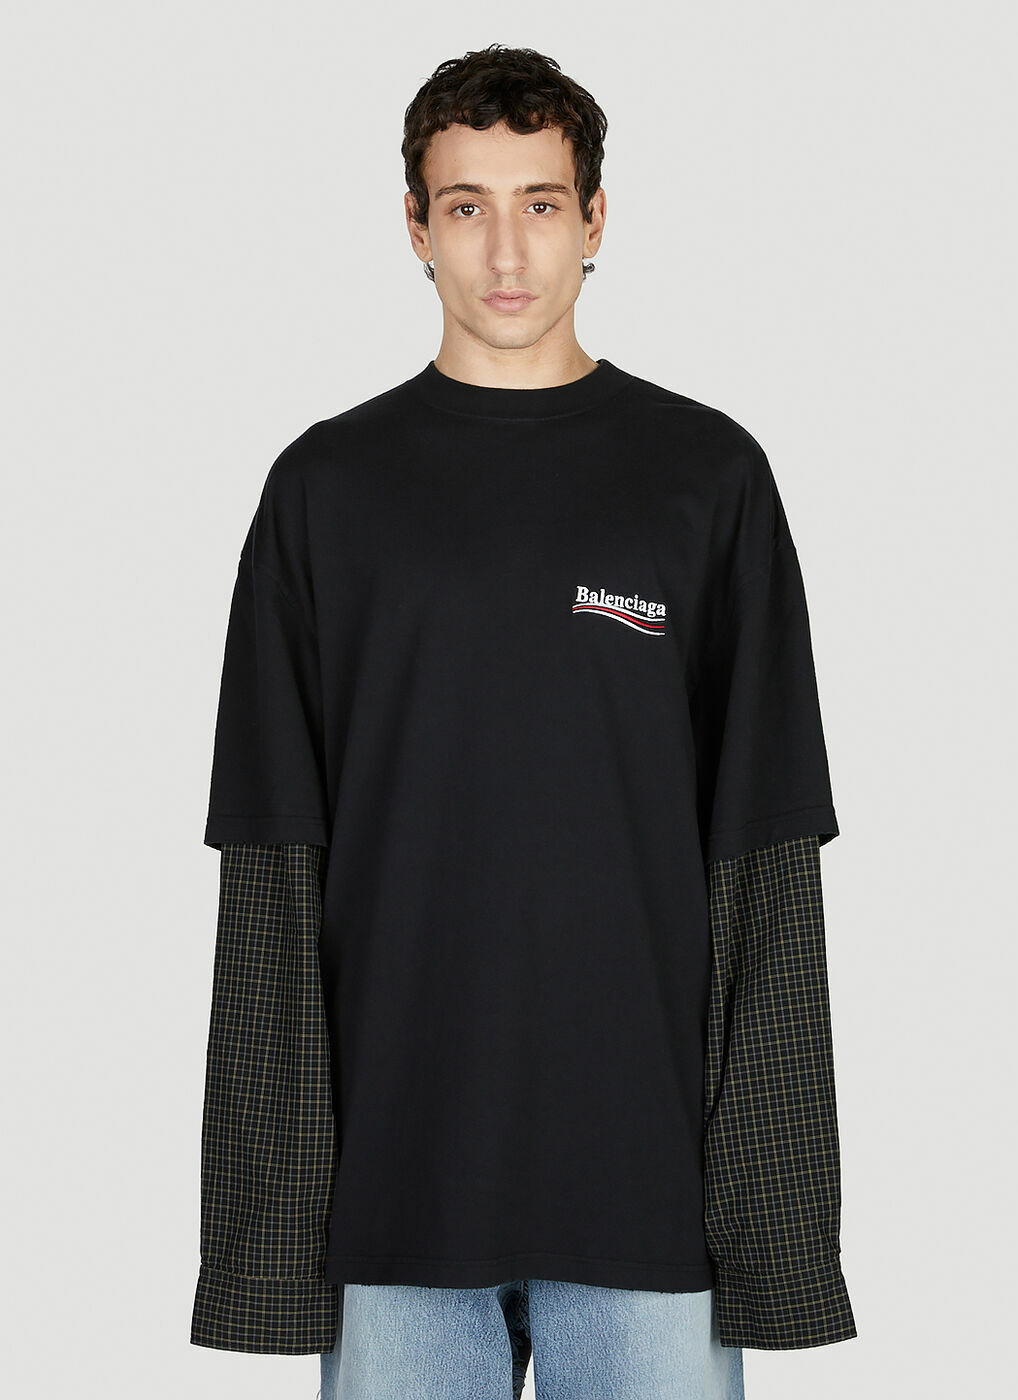 Balenciaga - Layered T-Shirt in Black Balenciaga